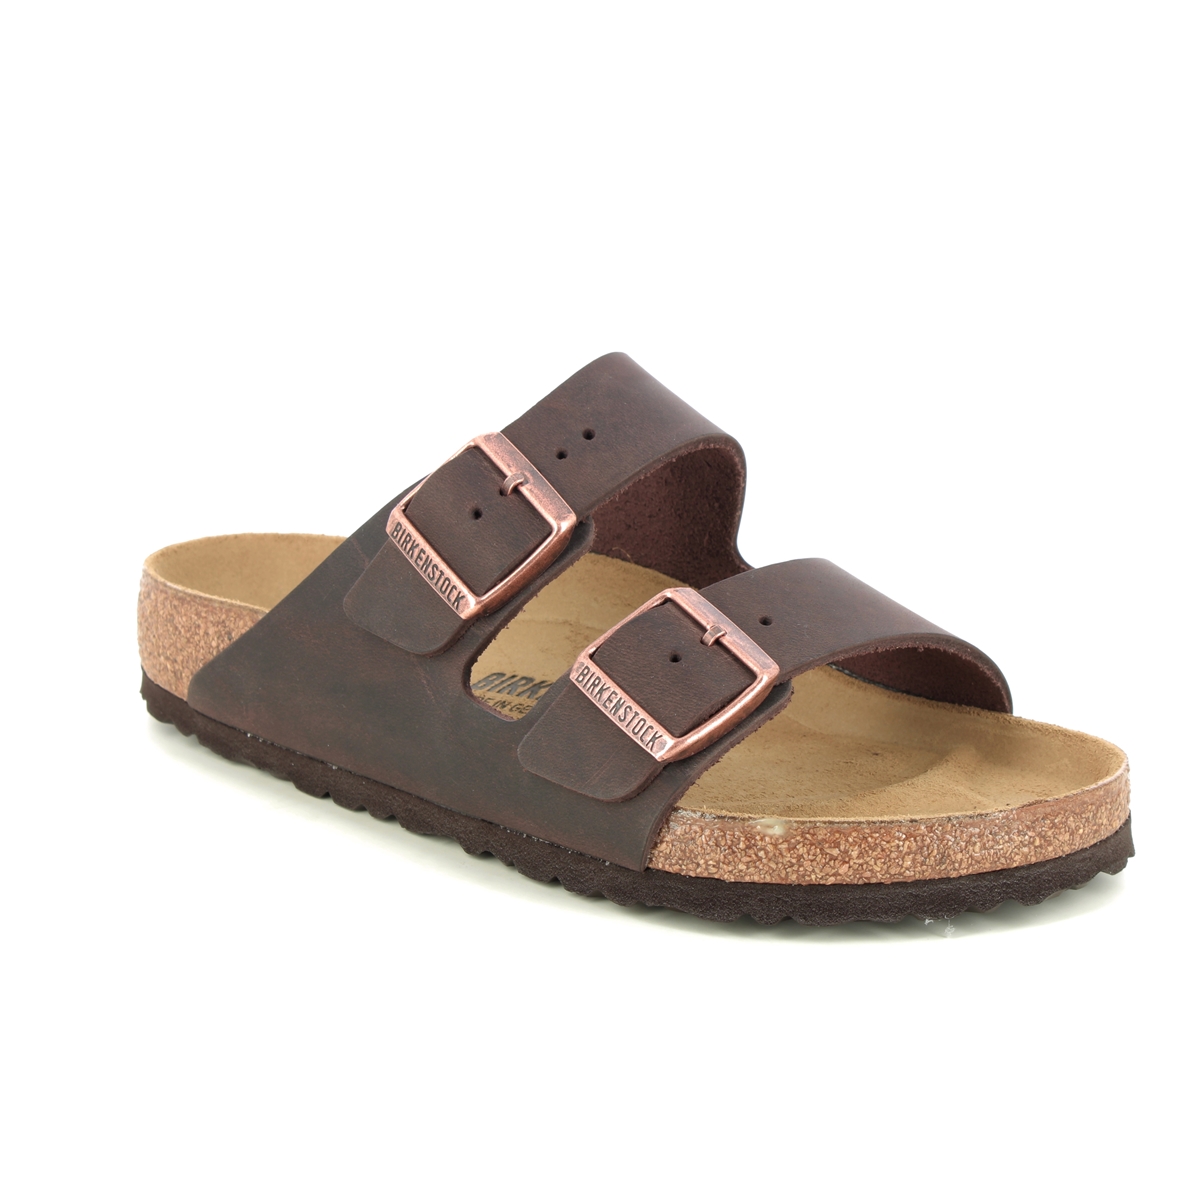 Birkenstock Arizona Dark brown Womens Slide Sandals 5253127 in a Plain Leather in Size 38